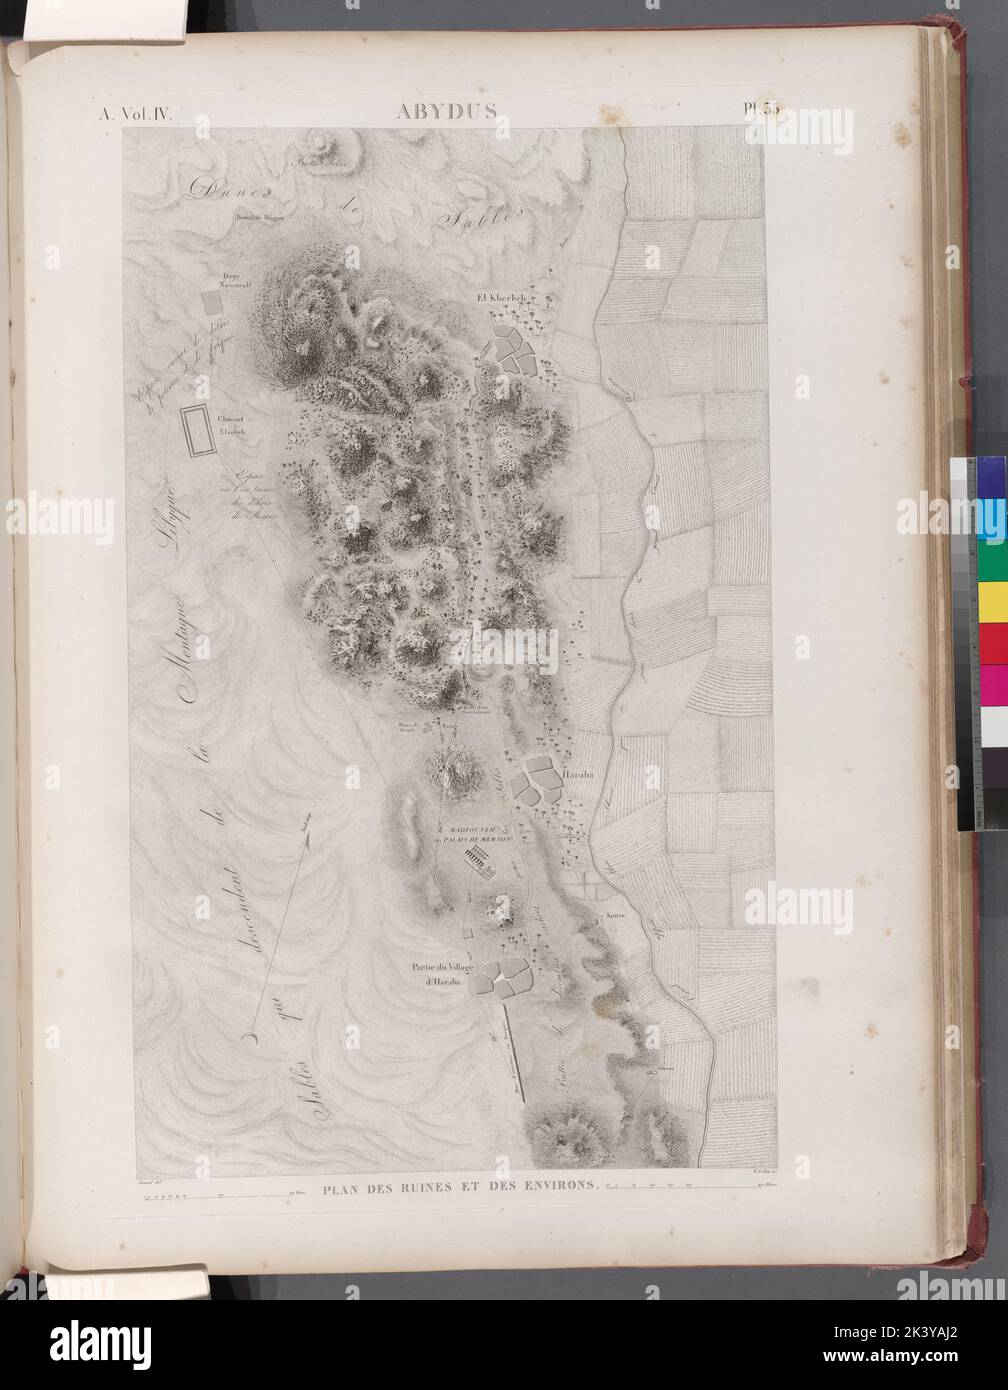 Abydus Abydos. Plan des ruines et des environs. Cartografica. Mappe. 1817. Divisione Rare Book. Egitto, Abydos (Egitto : città) Foto Stock